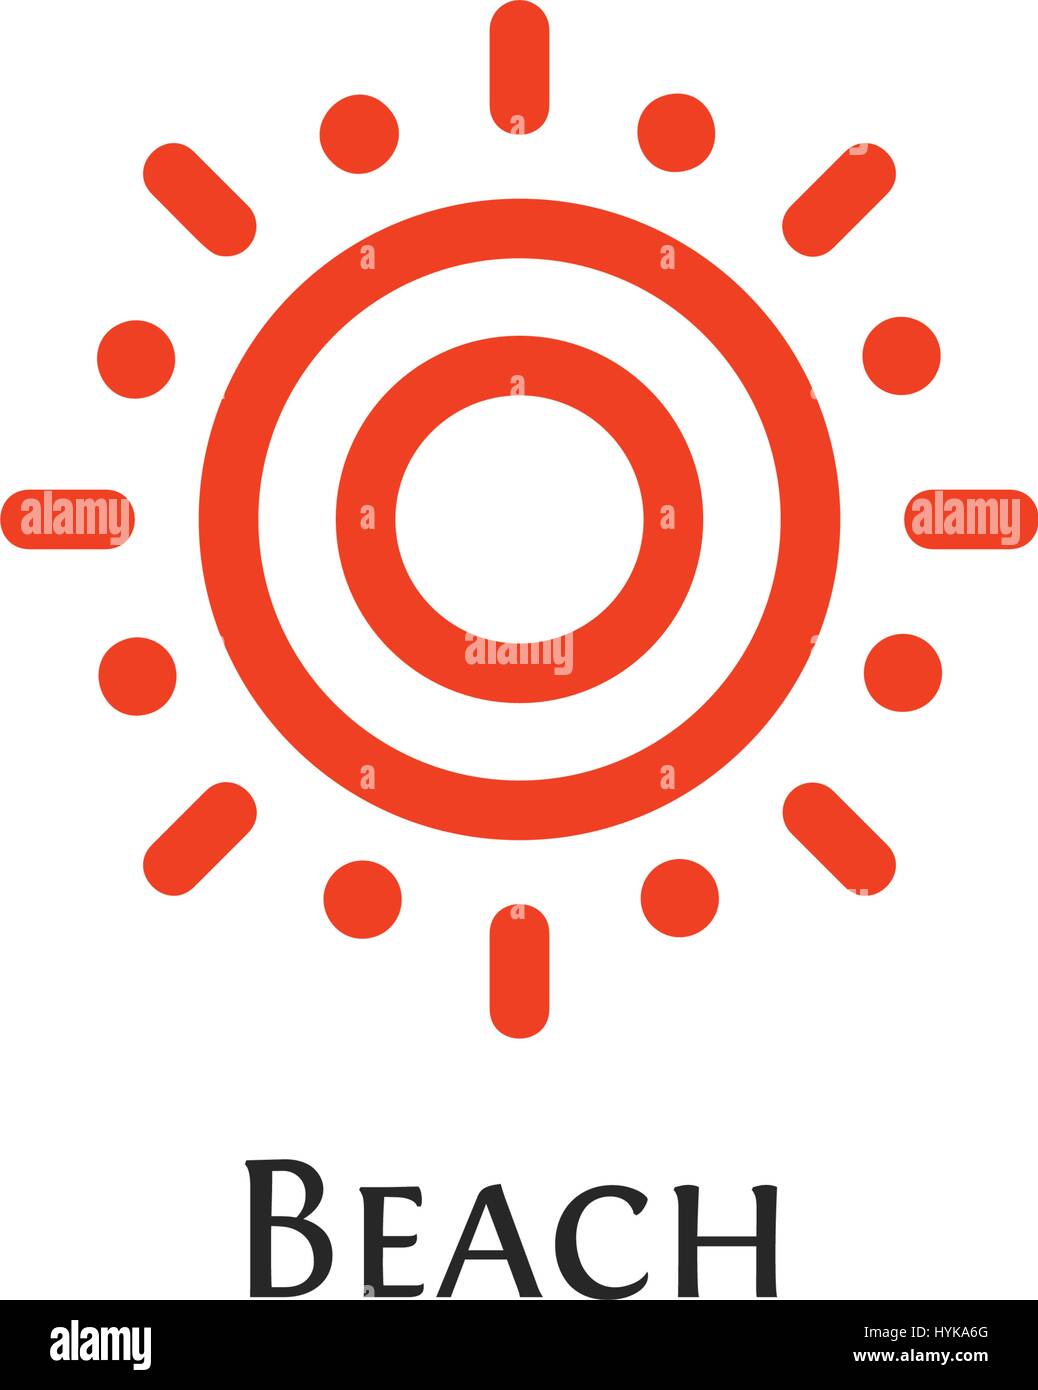 Isolierte abstrakt Runde Form Farbe orange Logo, Schriftzug Sonne, Ziel ist Vektor-illustration Stock Vektor